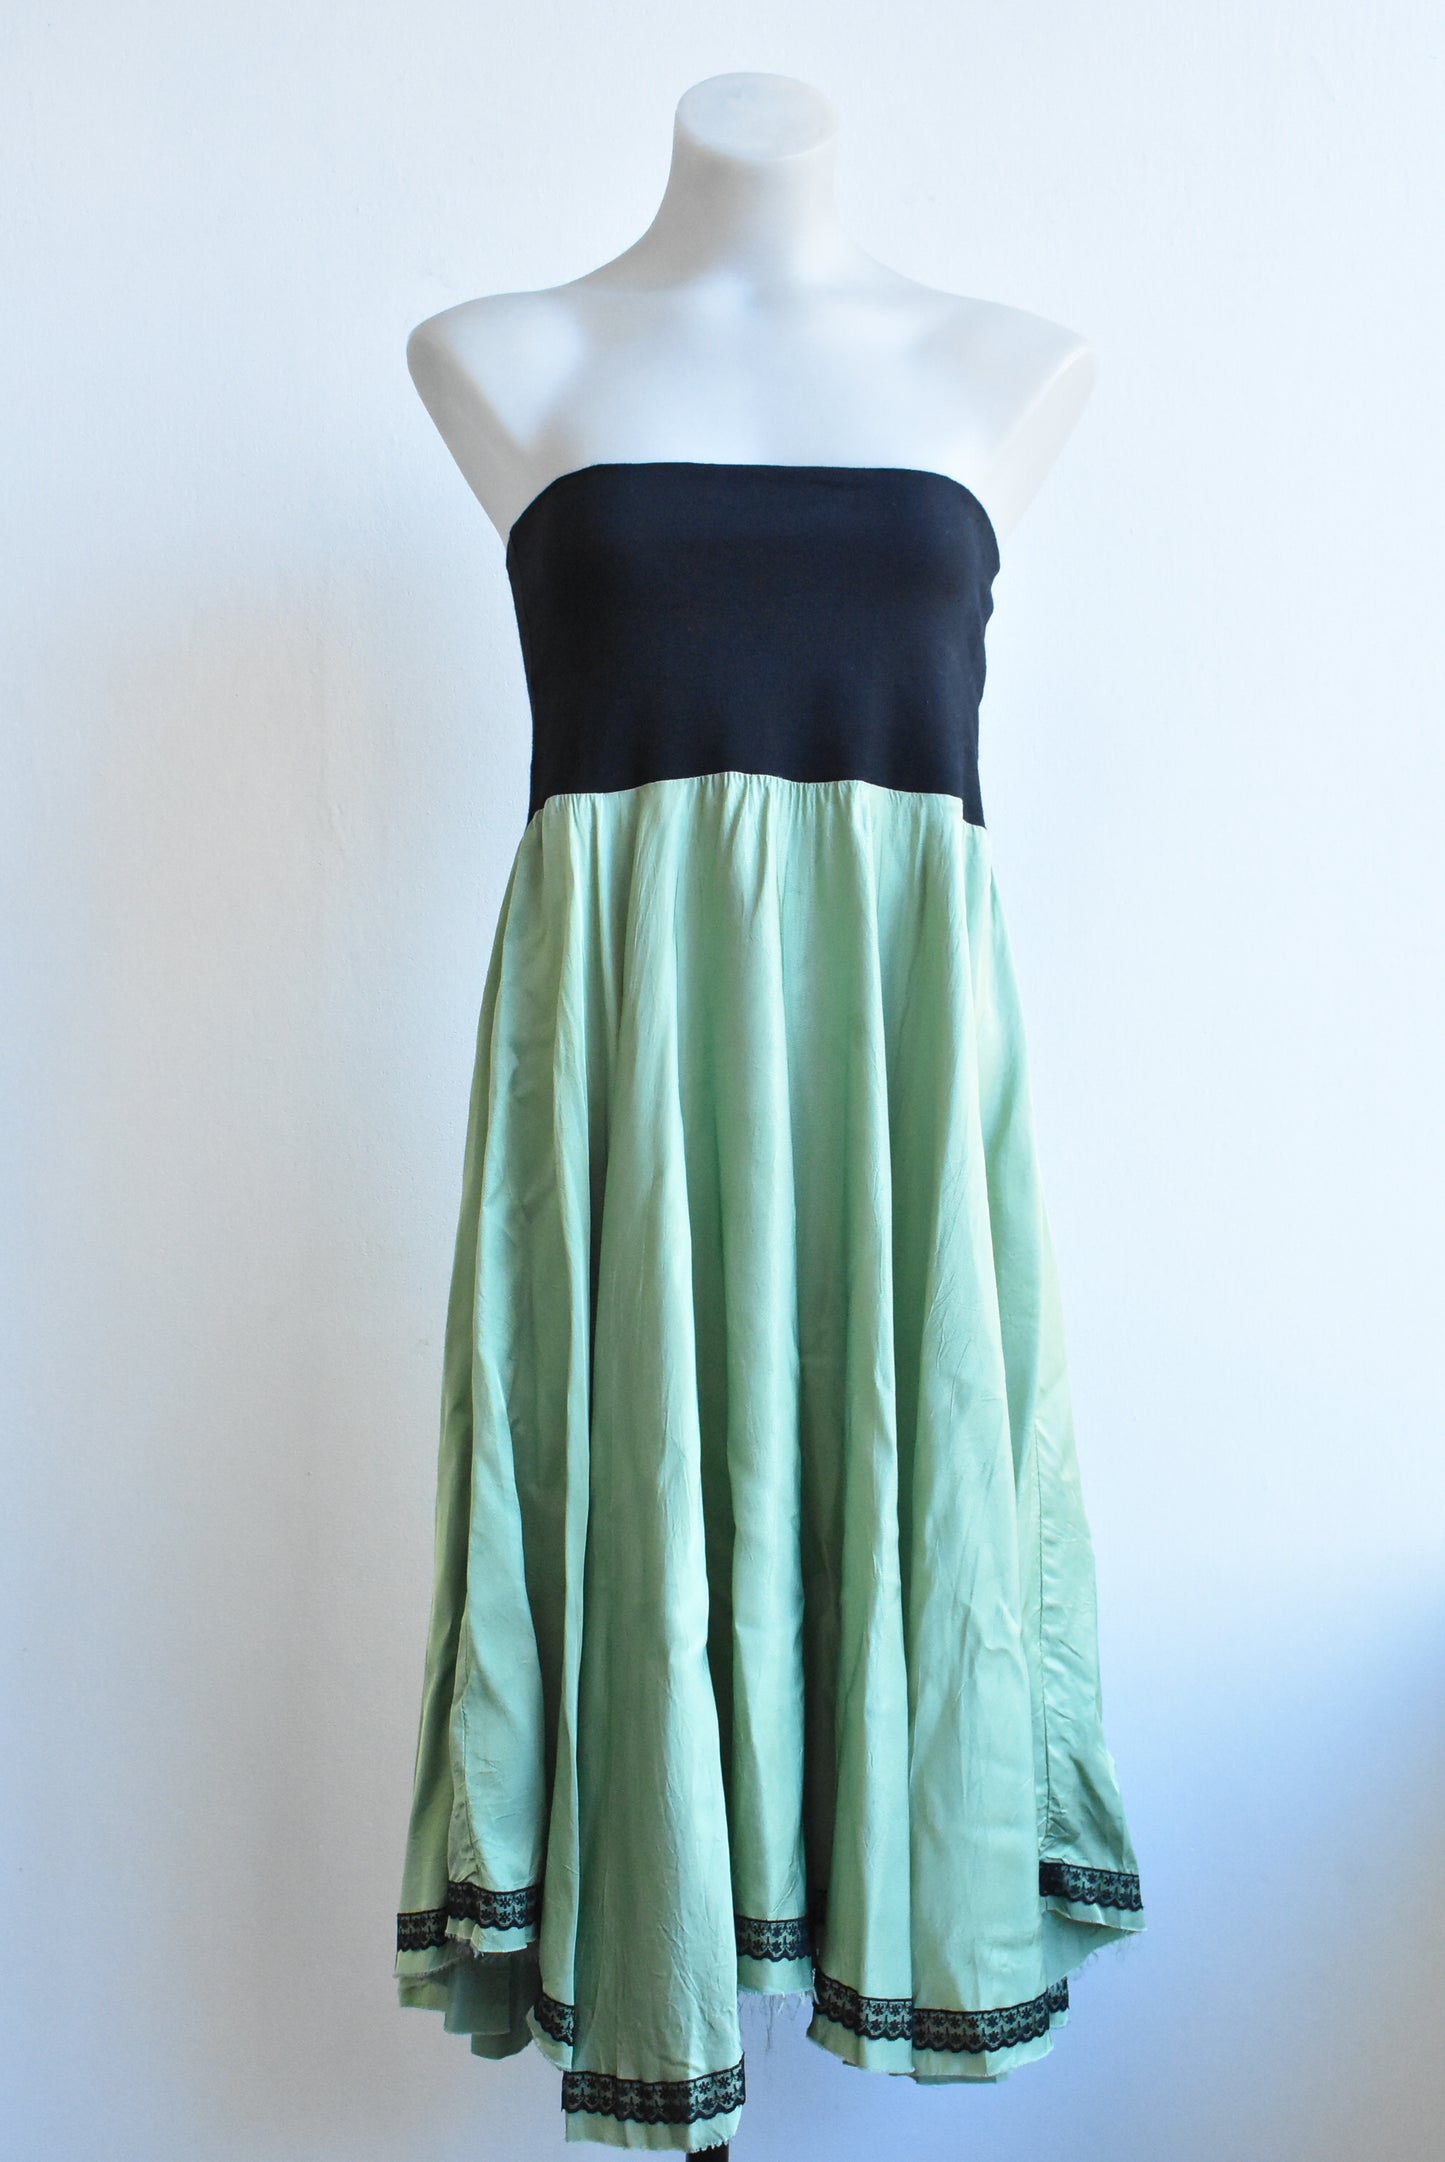 Caravan green lace-hemmed skirt/dress, size L